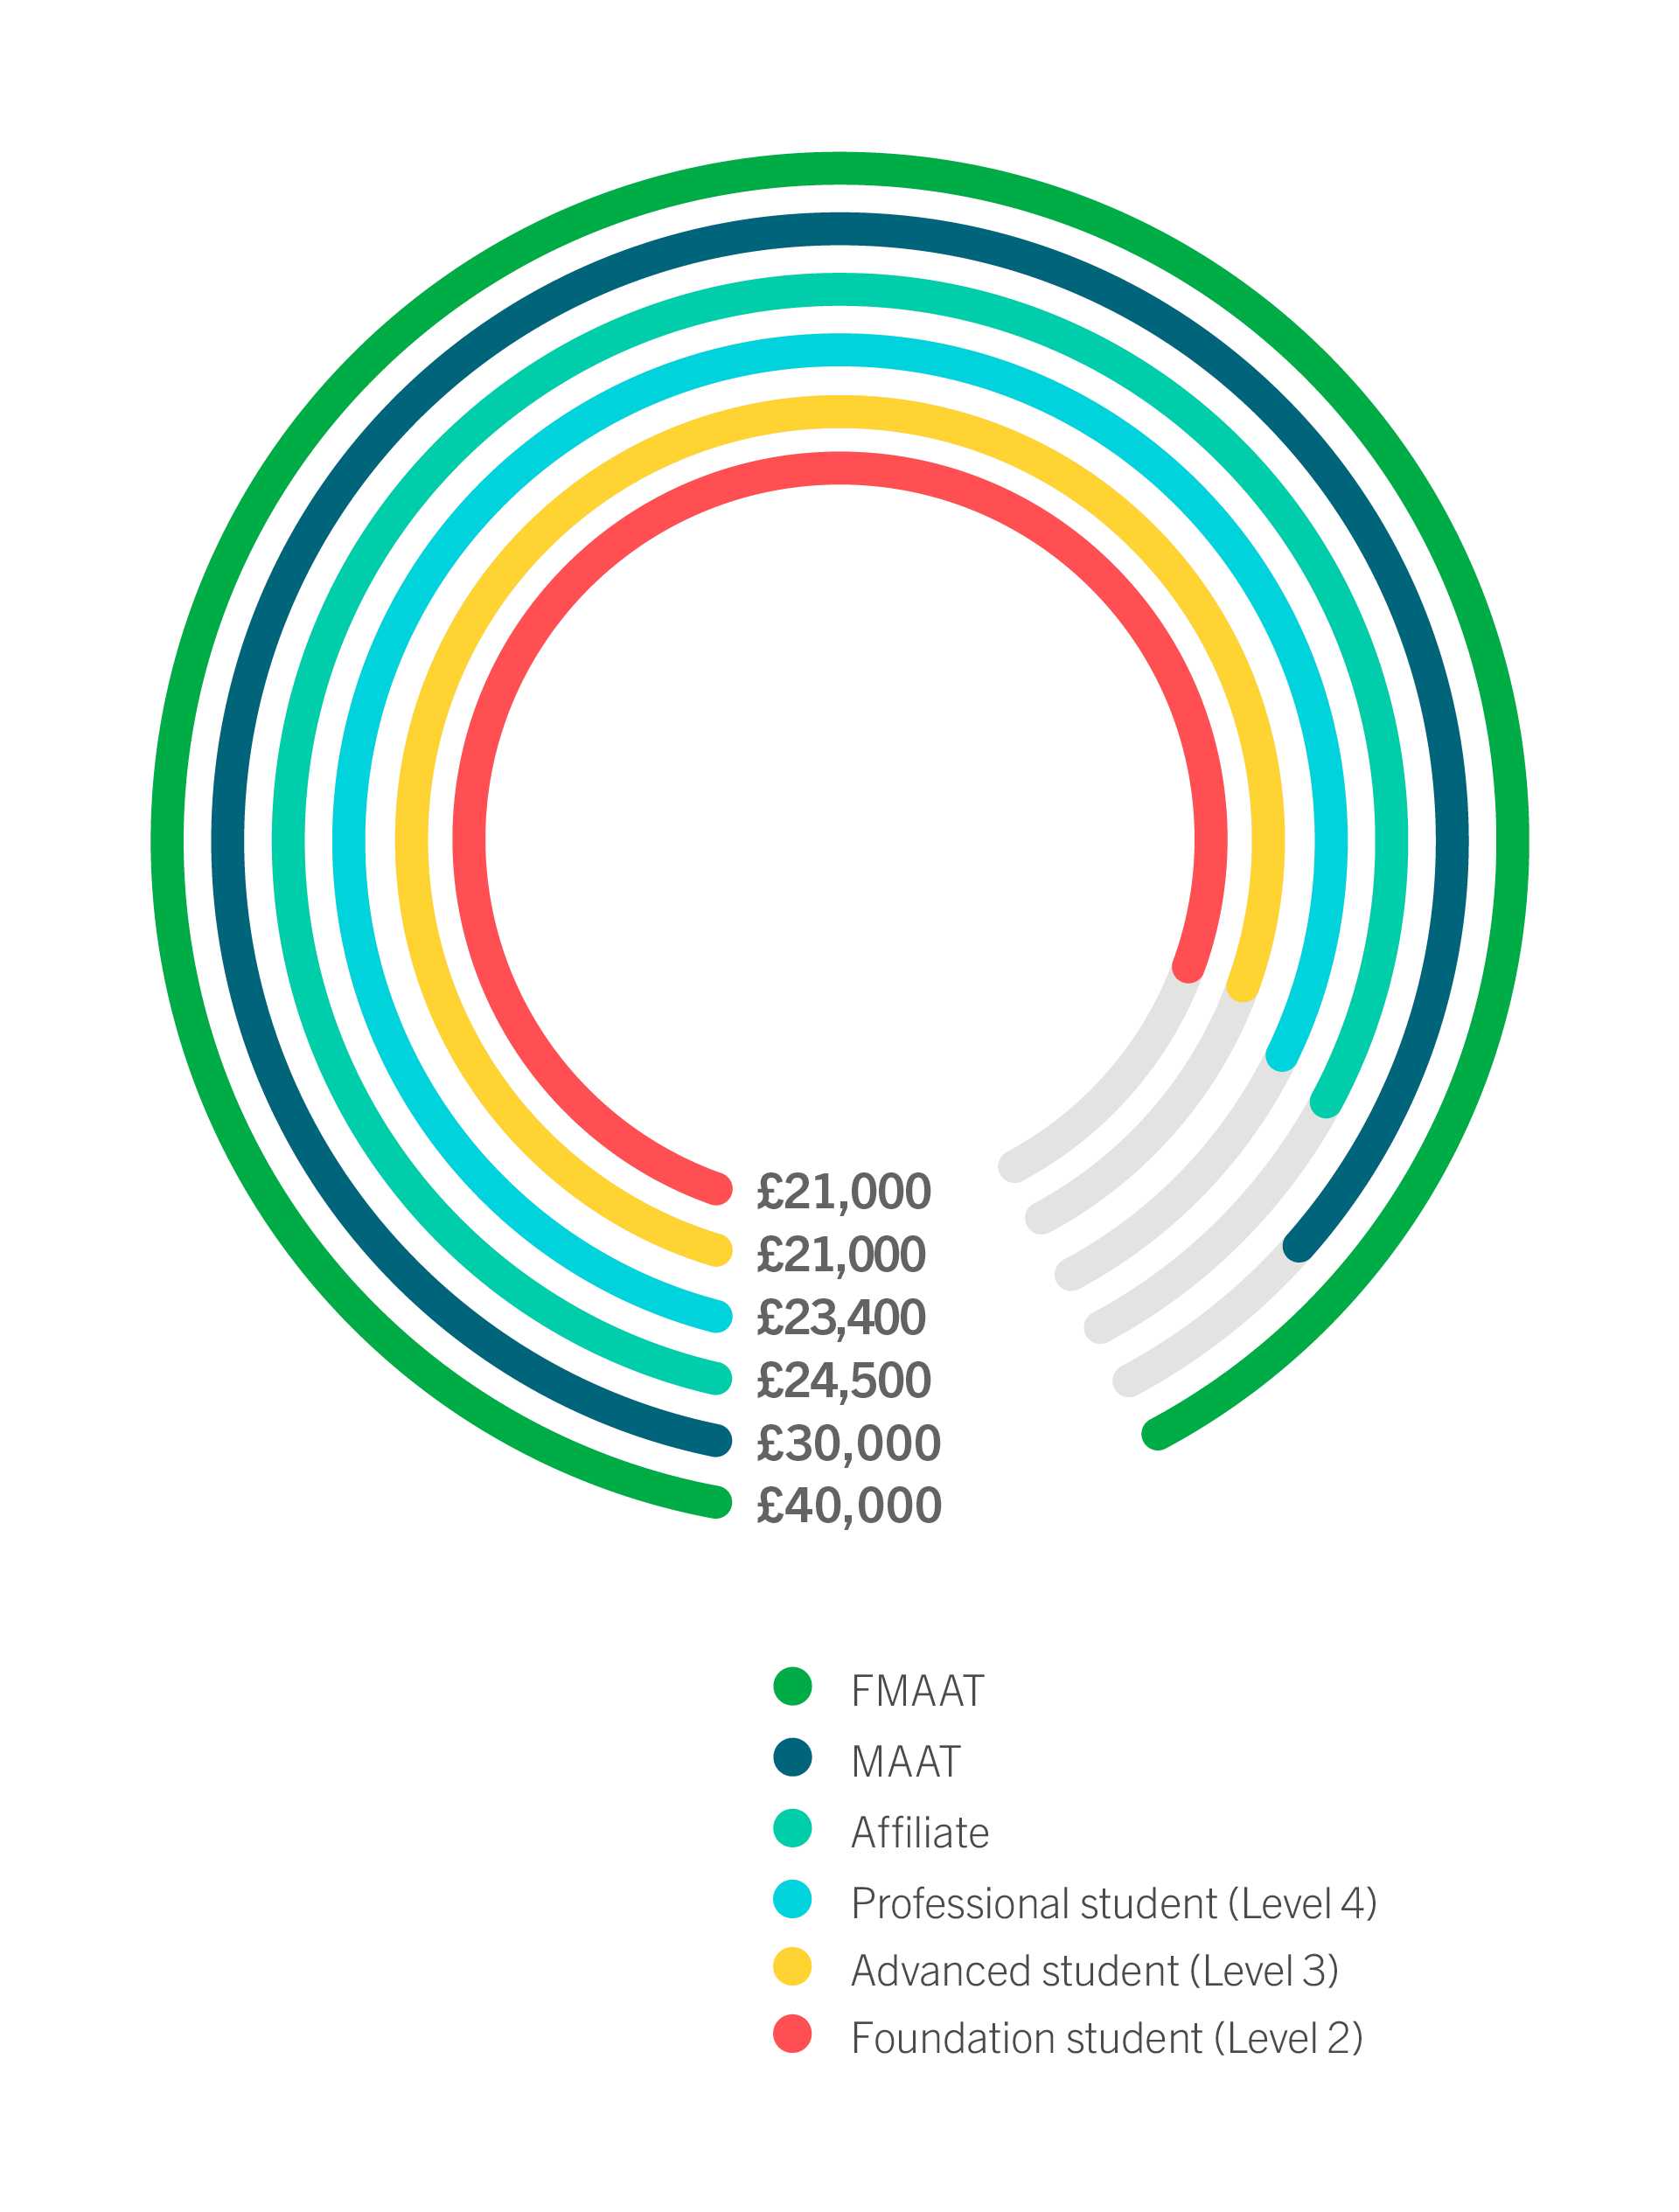 Average basic median salary for each level of AAT membership